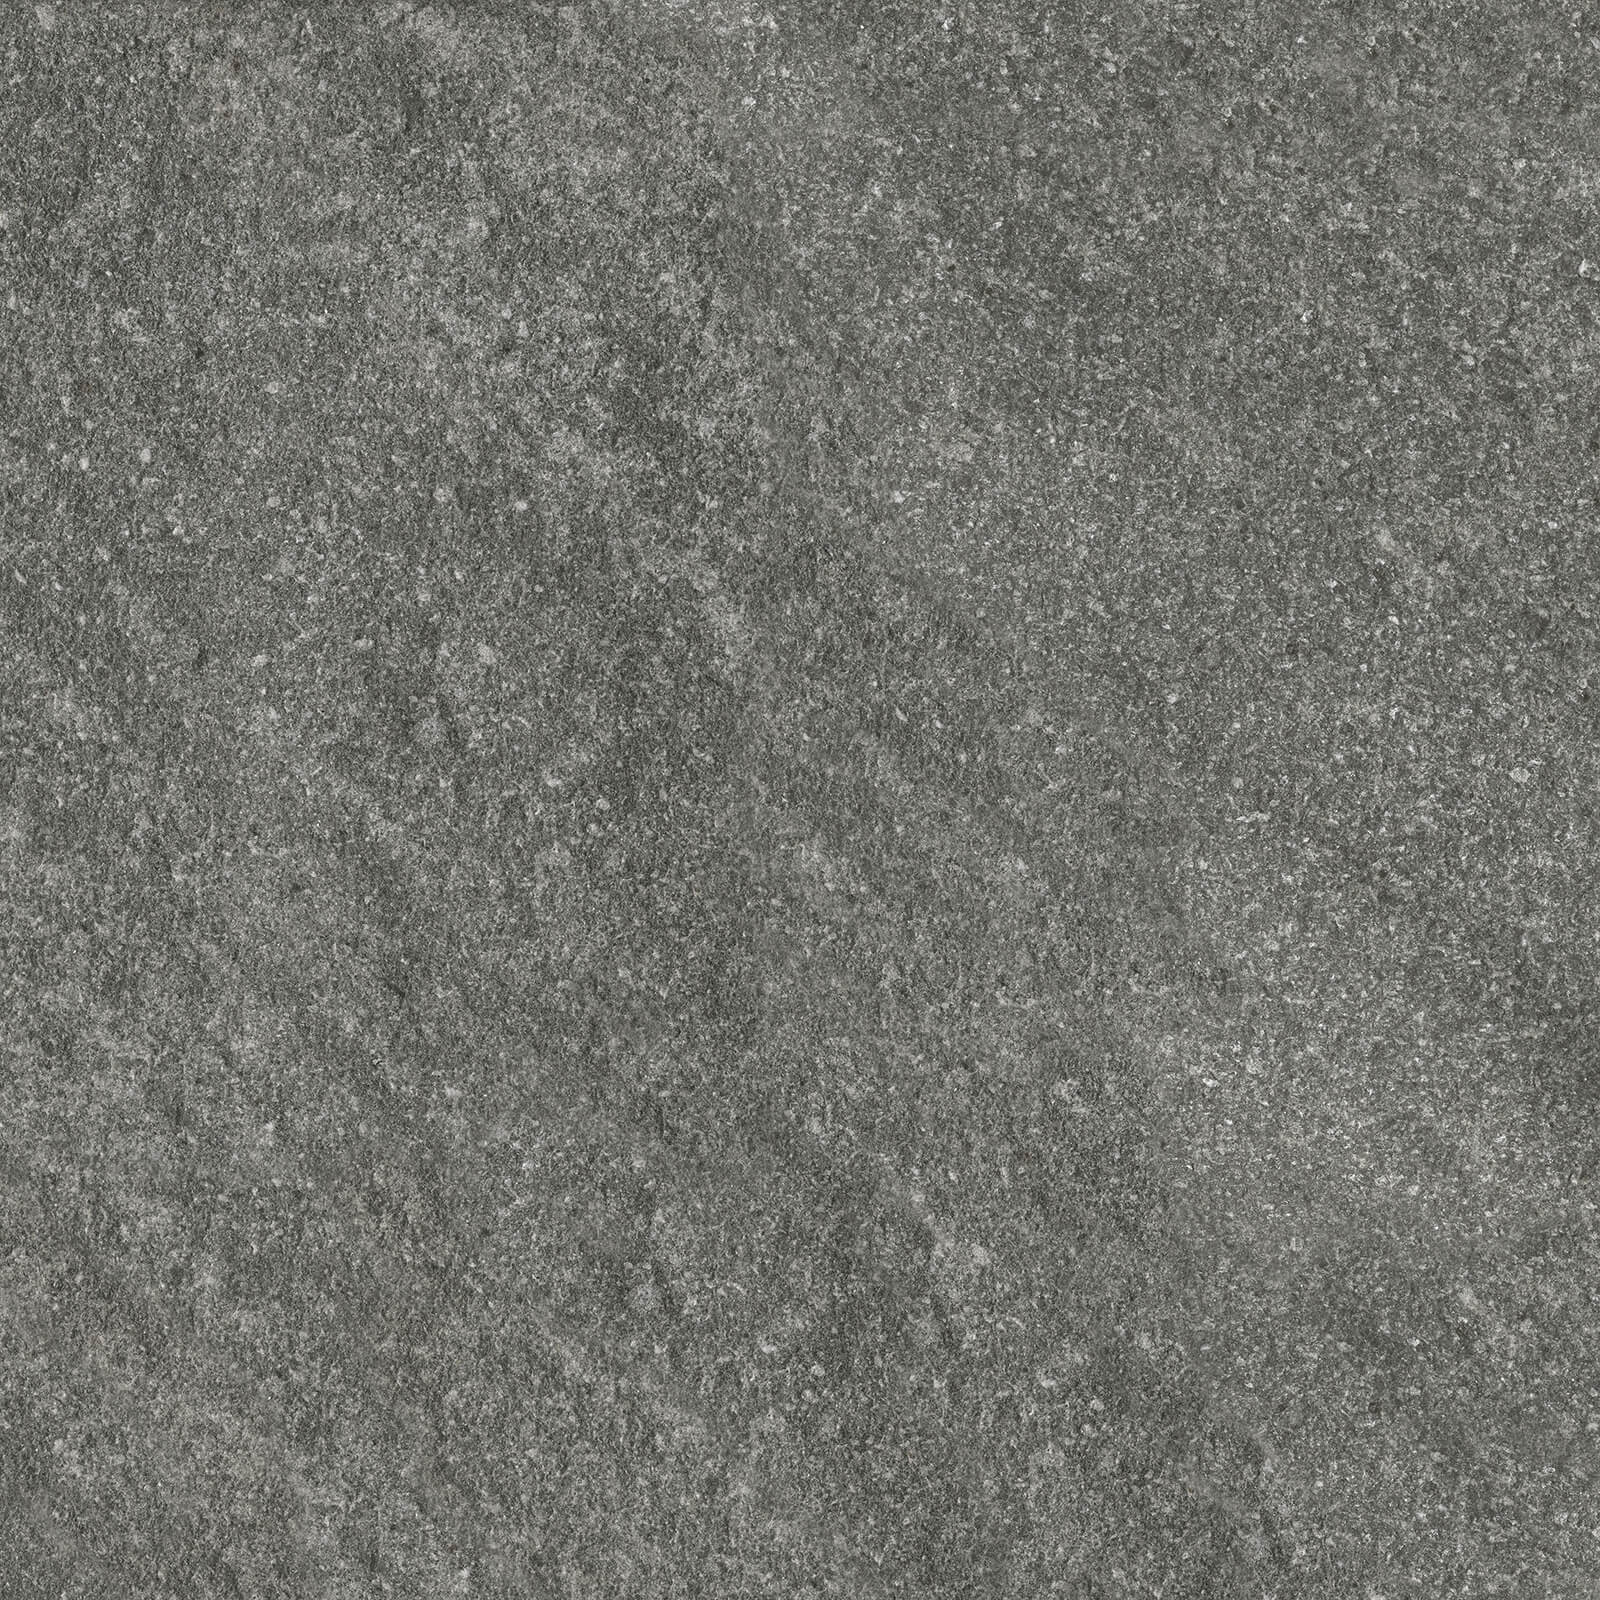 Engers Hard Rock Terrassenplatte basaltgrau matt 80x80x2cm